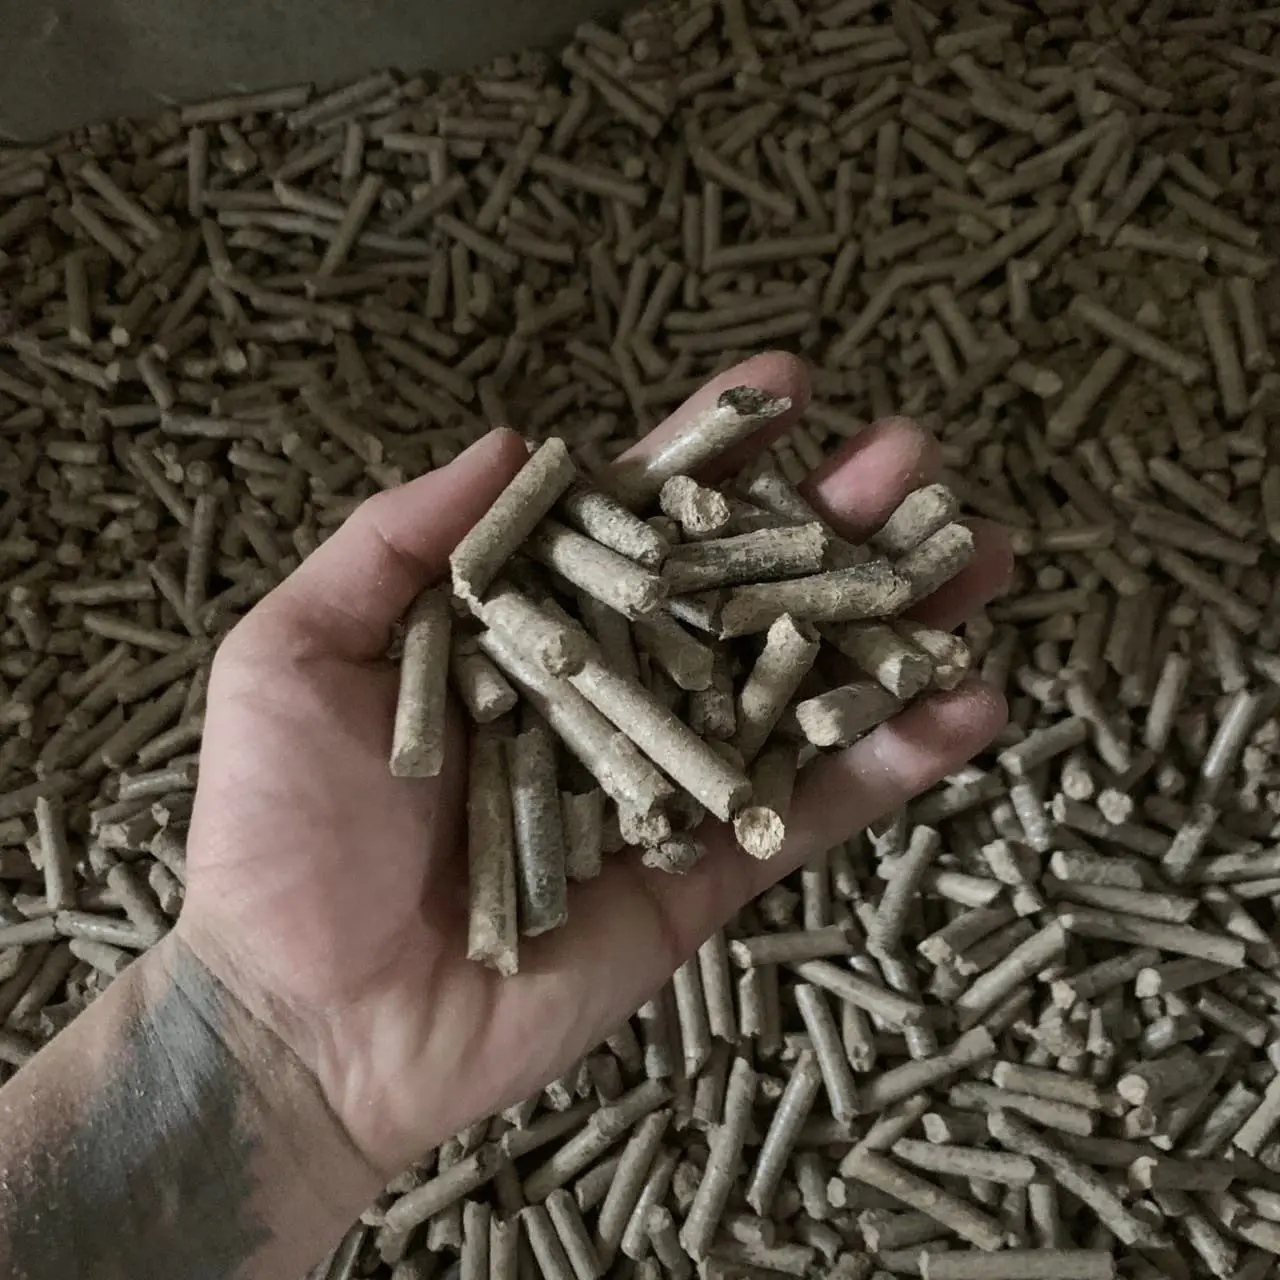 Wholesale 6mm 8mm Wood Pellets- A1/A2 Biomass Wood Pellet Heating Wood Pellets Europe from Vietnam/Ms.Thi +84 988 872 713